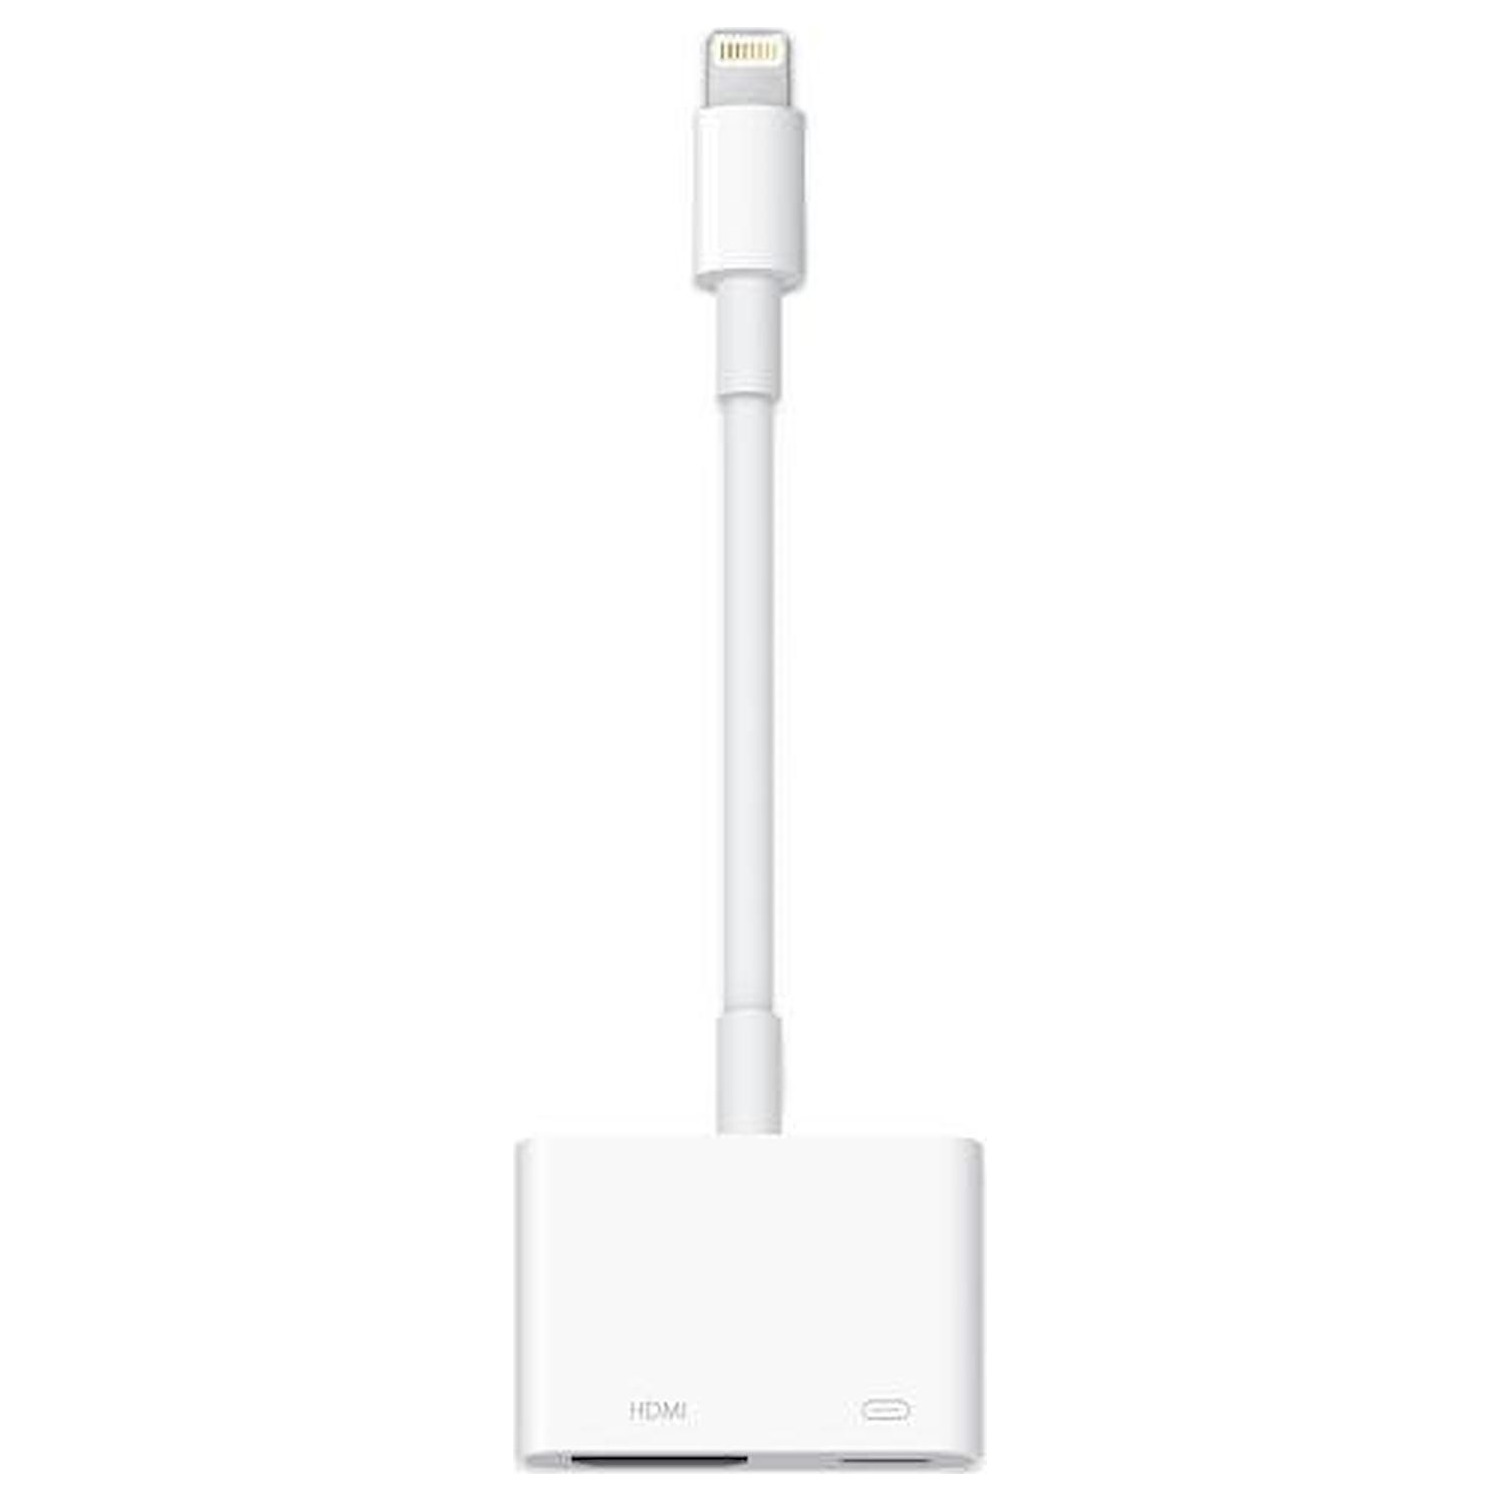 Immagine per Adattatore lightning digital AV Apple per         iphone ipad o ipod con connettore lightning da DIMOStore